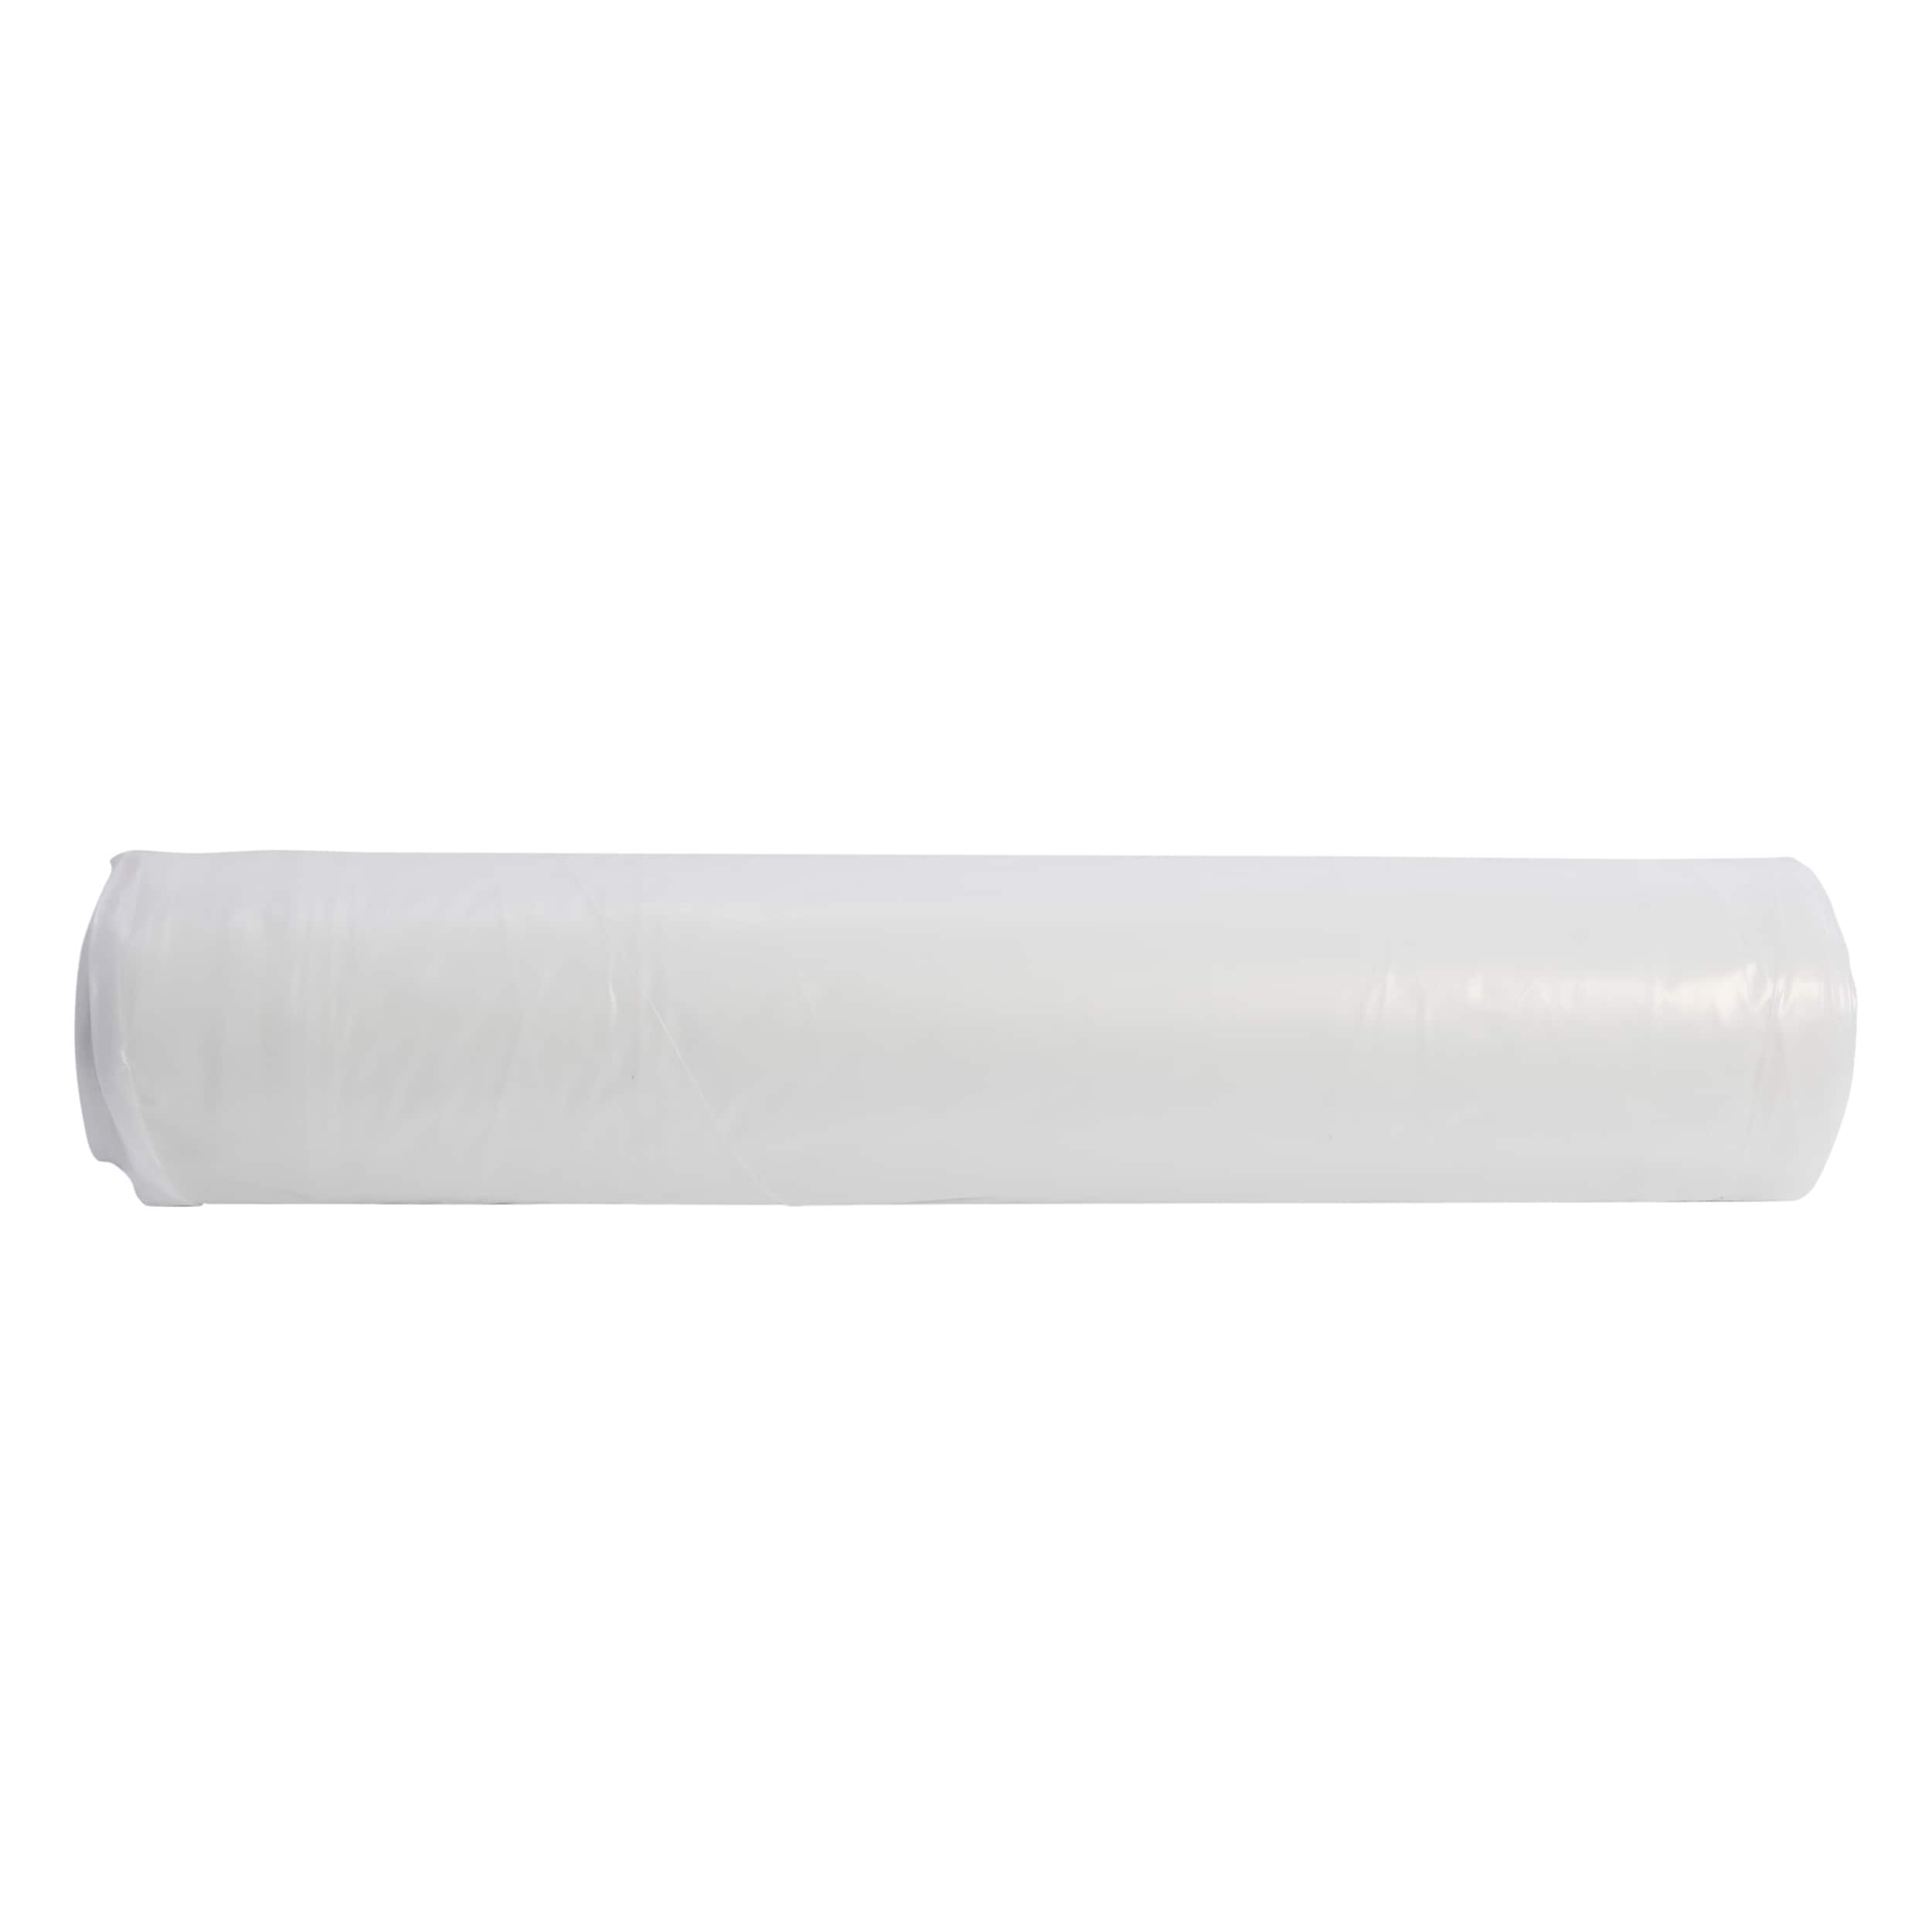 20 x 100 ft. x 4 mil Roll of Heavy Duty White Plastic Sheet